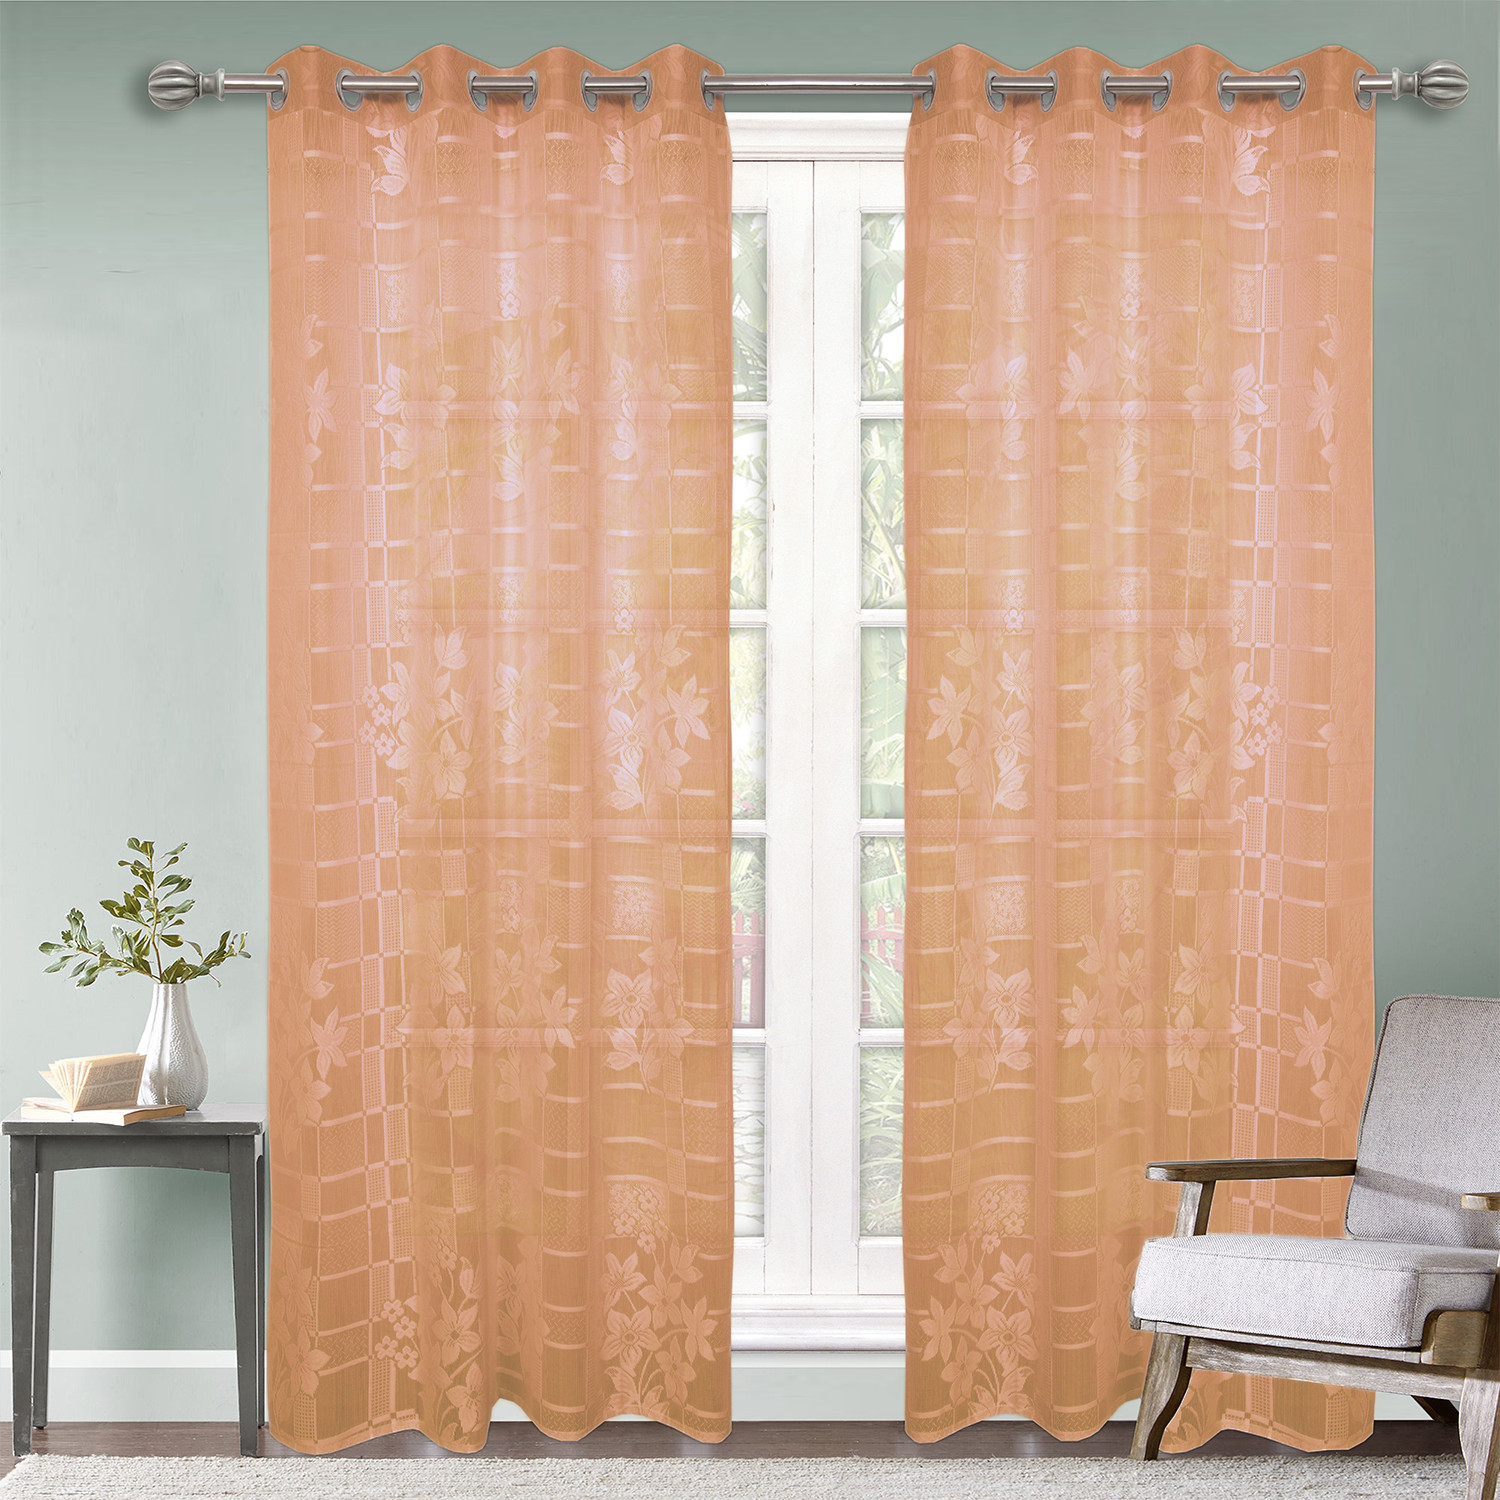 Kuber Industries Flower Print Home Decor Cotton Door Curtain With 8 Eyeletss, 7 Feet (Brown)